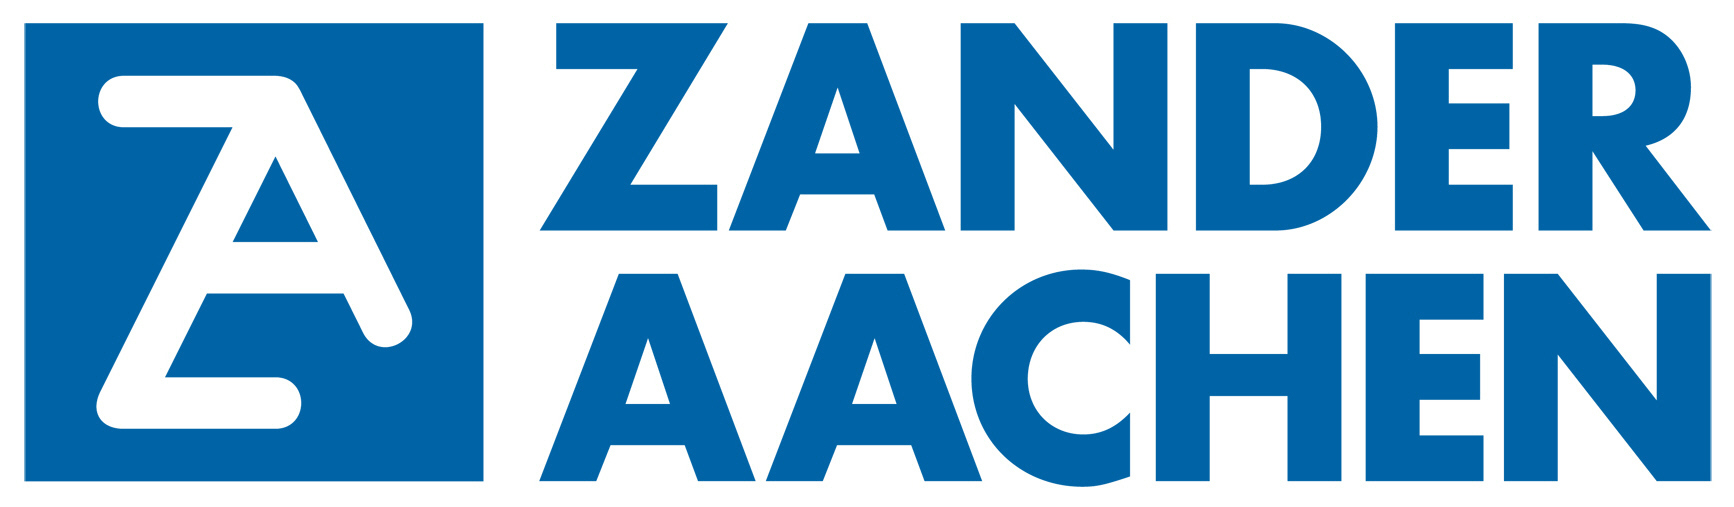 ZANDER_AACHEN_Logo_2012_RGB_LR